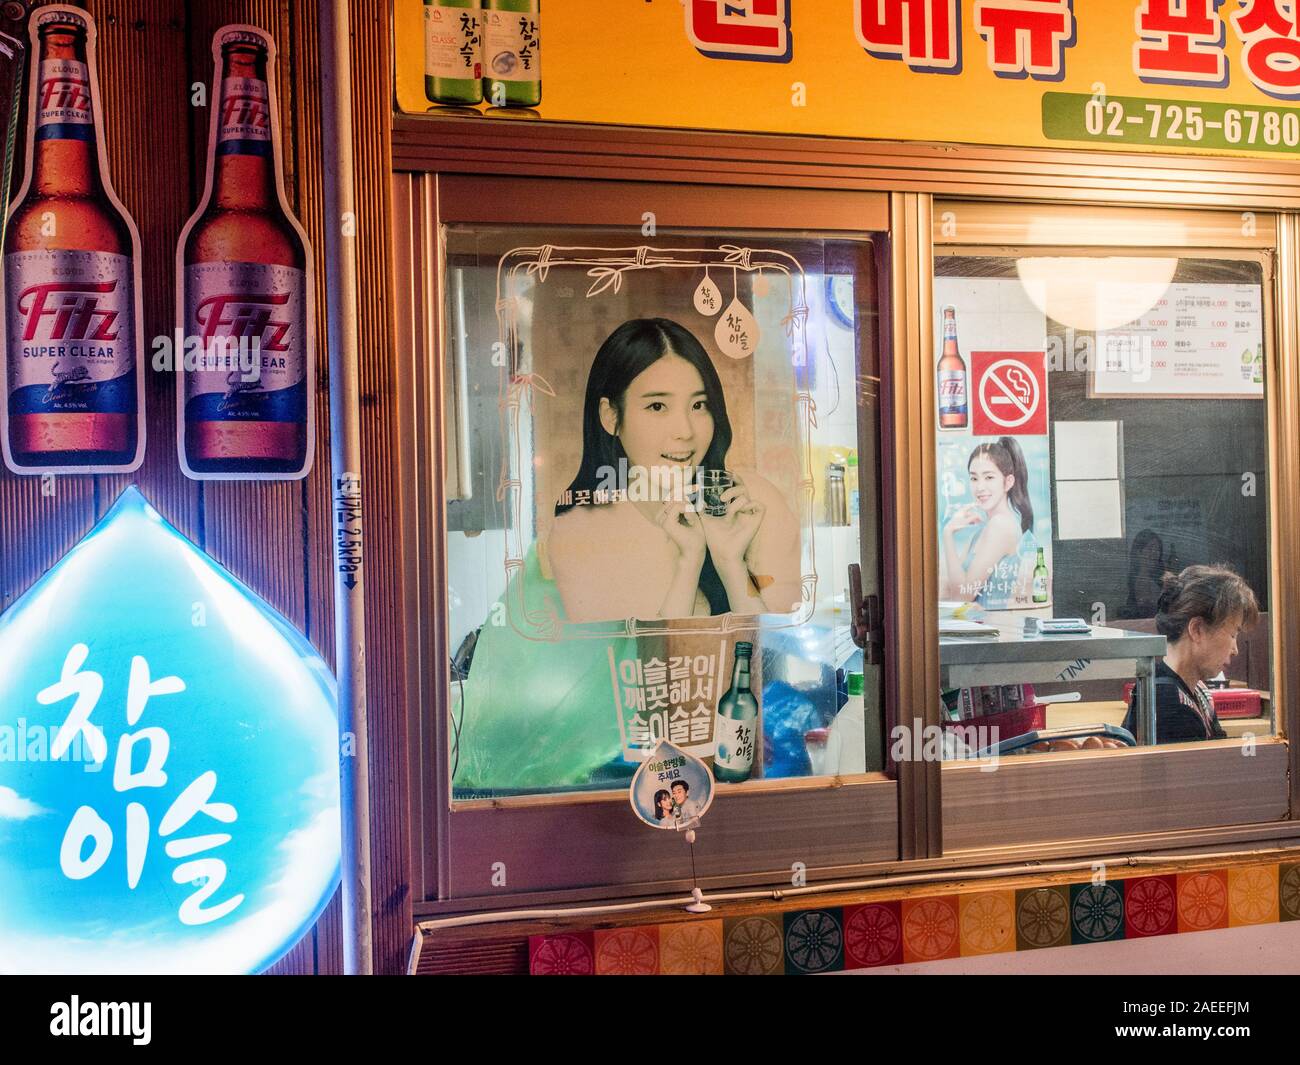 Restaurant window, alcohol liquor advertisments featuring young women, woman worker asleep inside, night street, Gyeongbokgung,  Seoul, South Korea Stock Photo